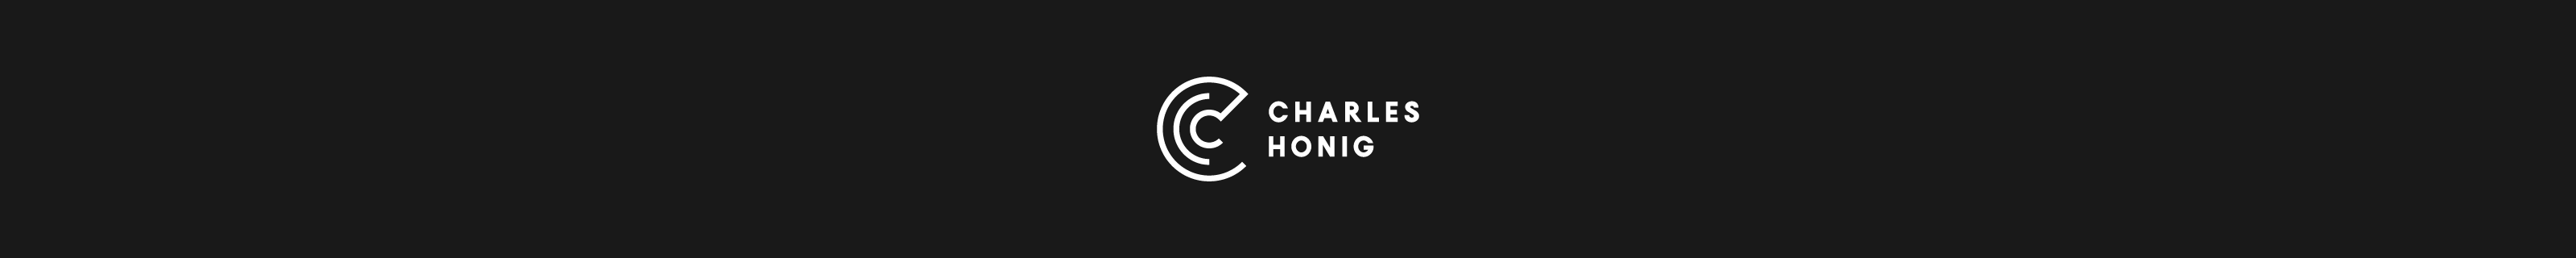 Charles Honig's profile banner